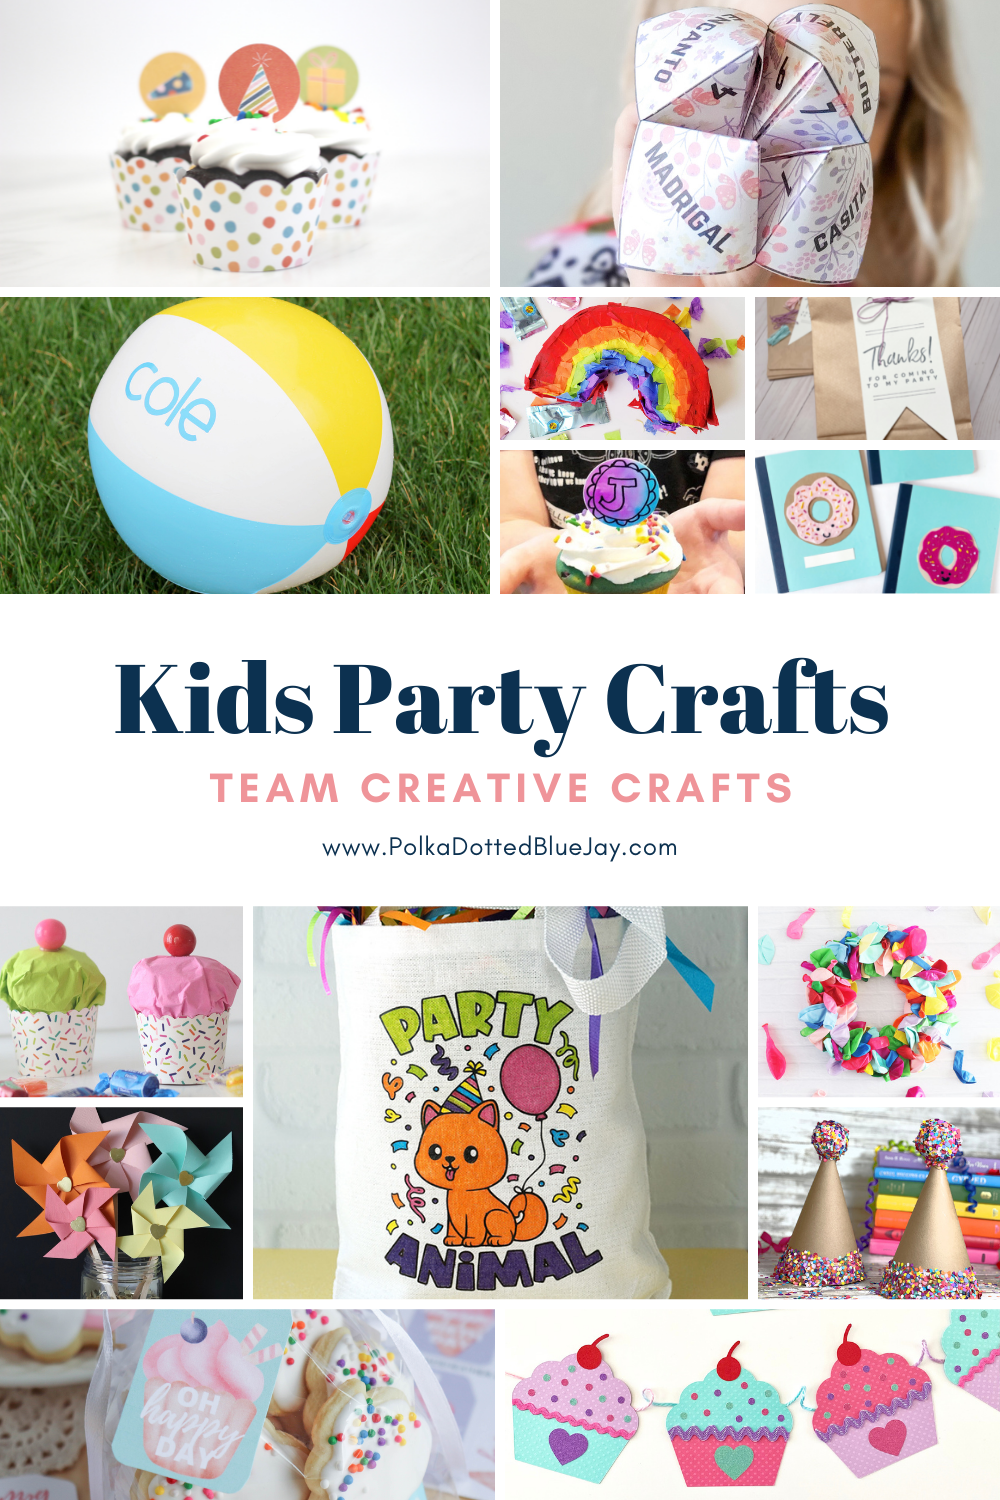 14 Kids Party Crafts - Team Creative Crafts